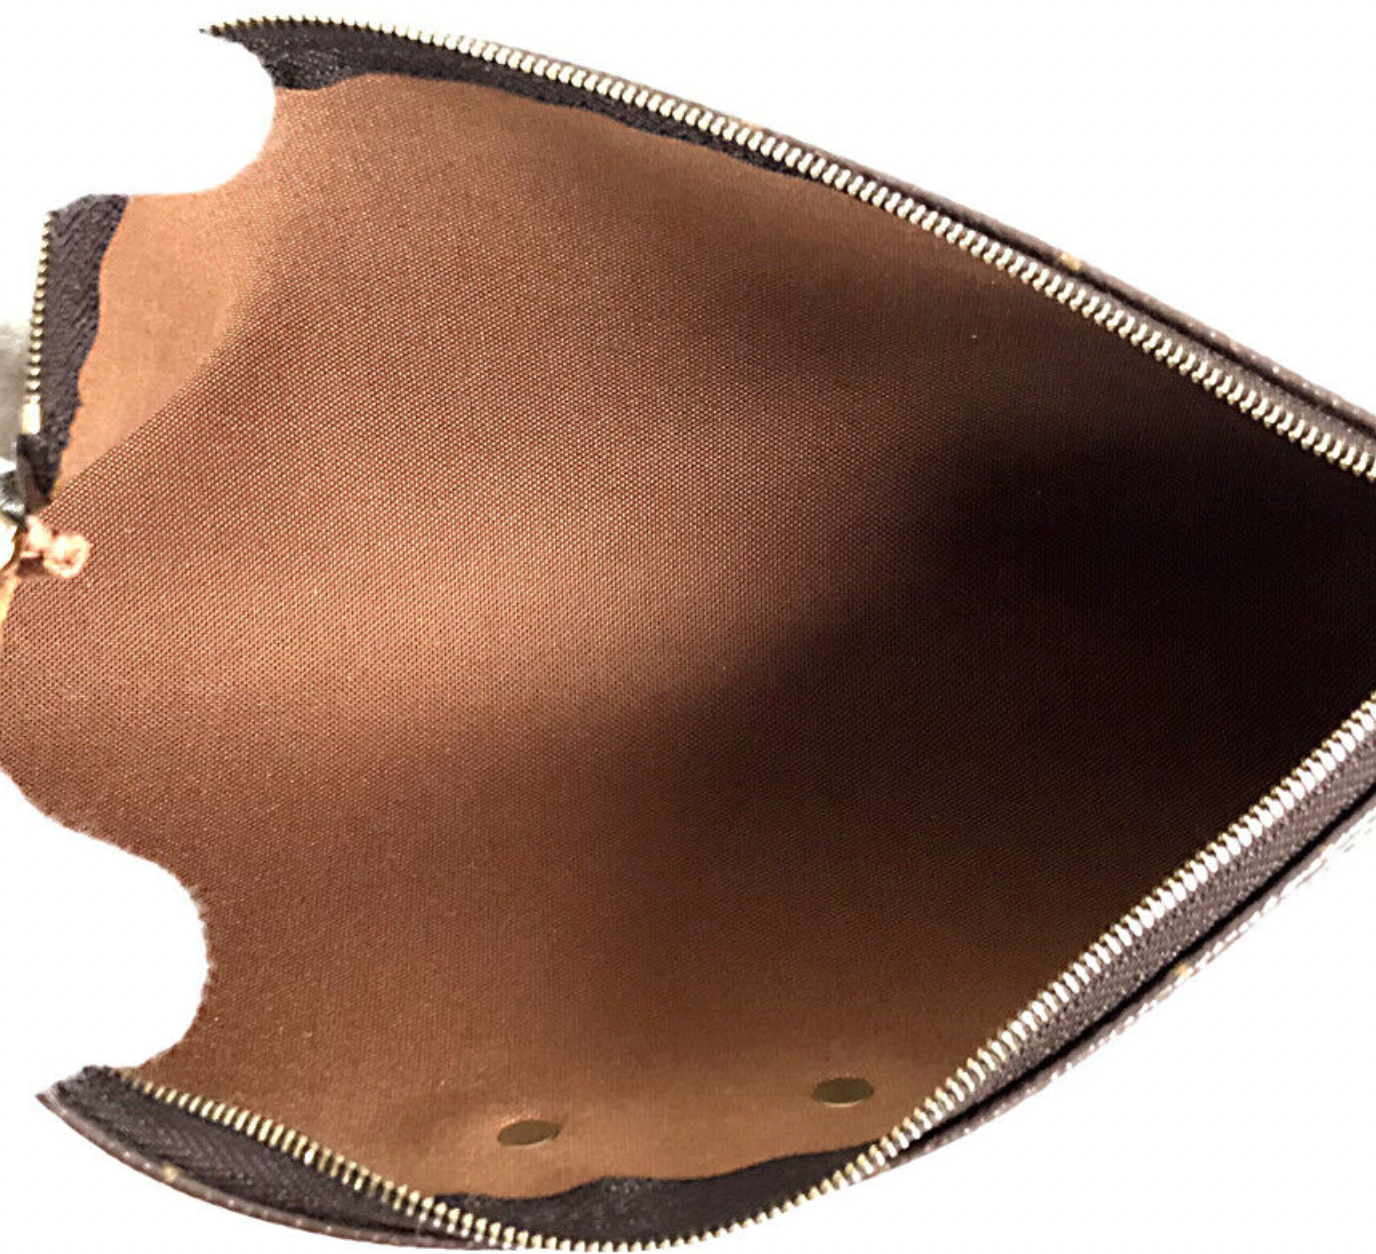 PRELOVED Louis Vuitton Eva Handbag Monogram Canvas Crossbody Bag